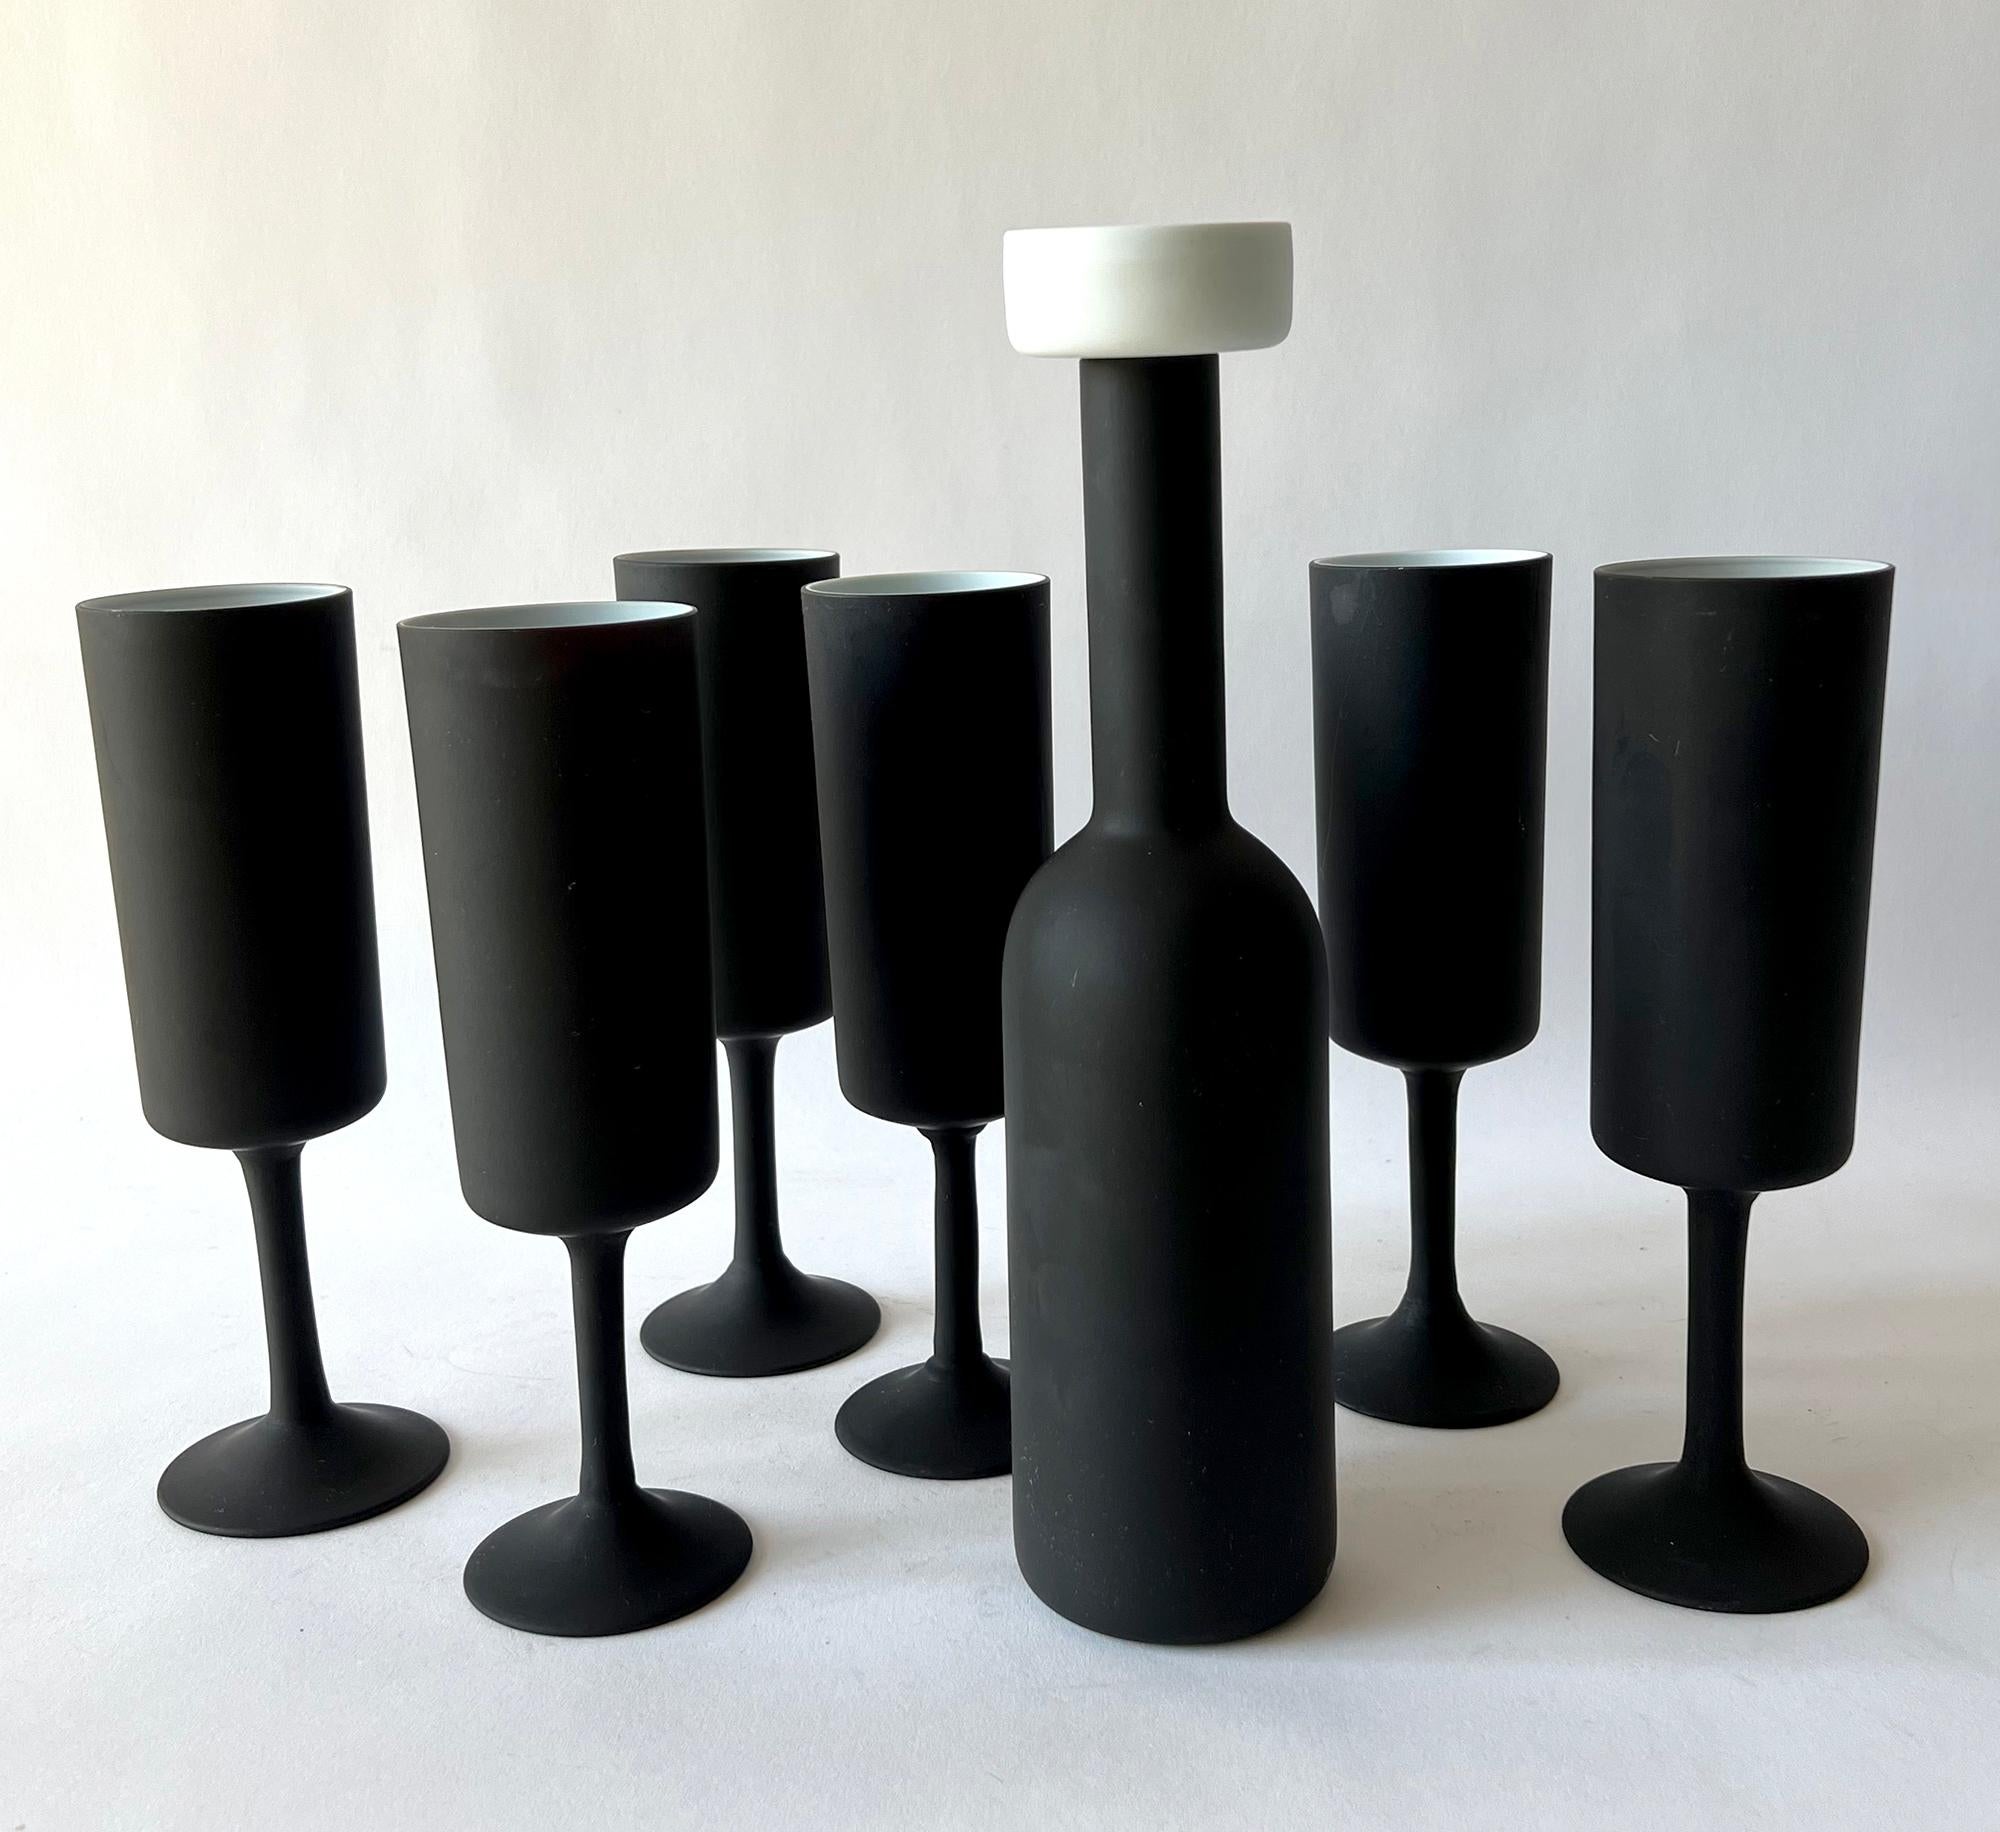 Dramatic, black satin glass with white cased glass interior wine decanter and six glass flute set, created by Carlo Moretti for Cristalleria Nason e Moretti, Murano, Italy. Decanter measures 12